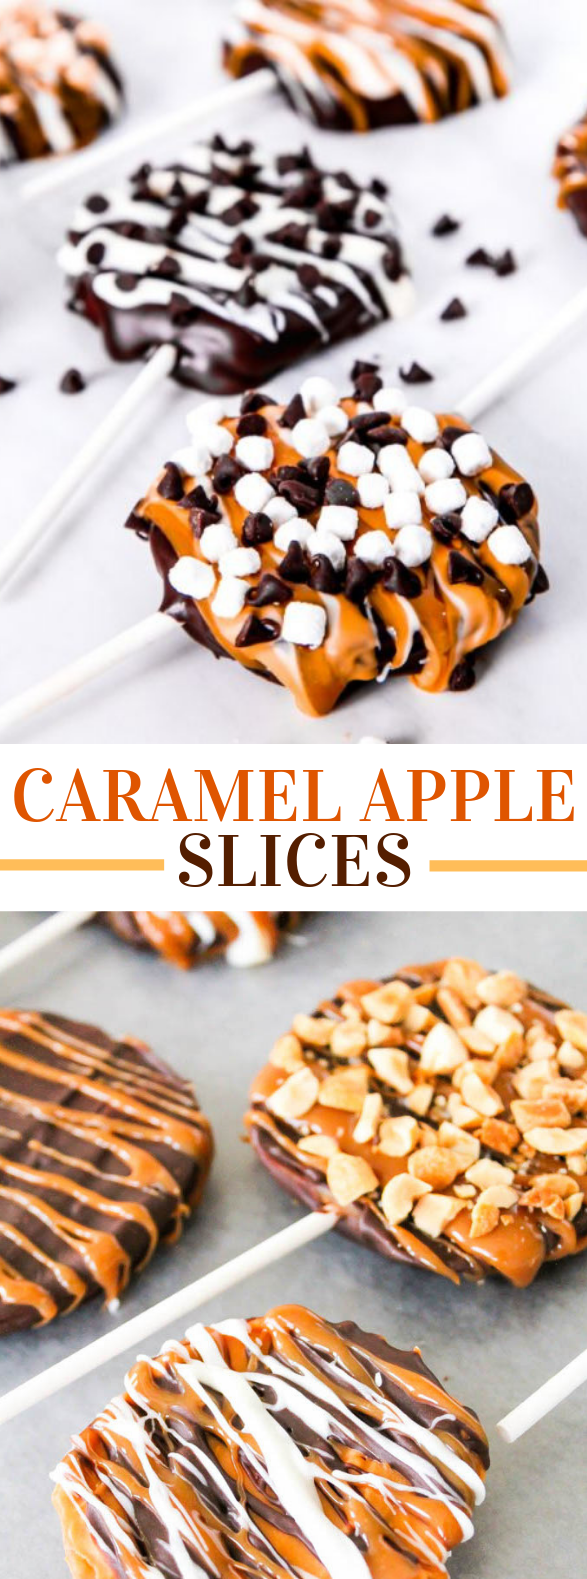 Caramel Apple Slices #desserts #candy